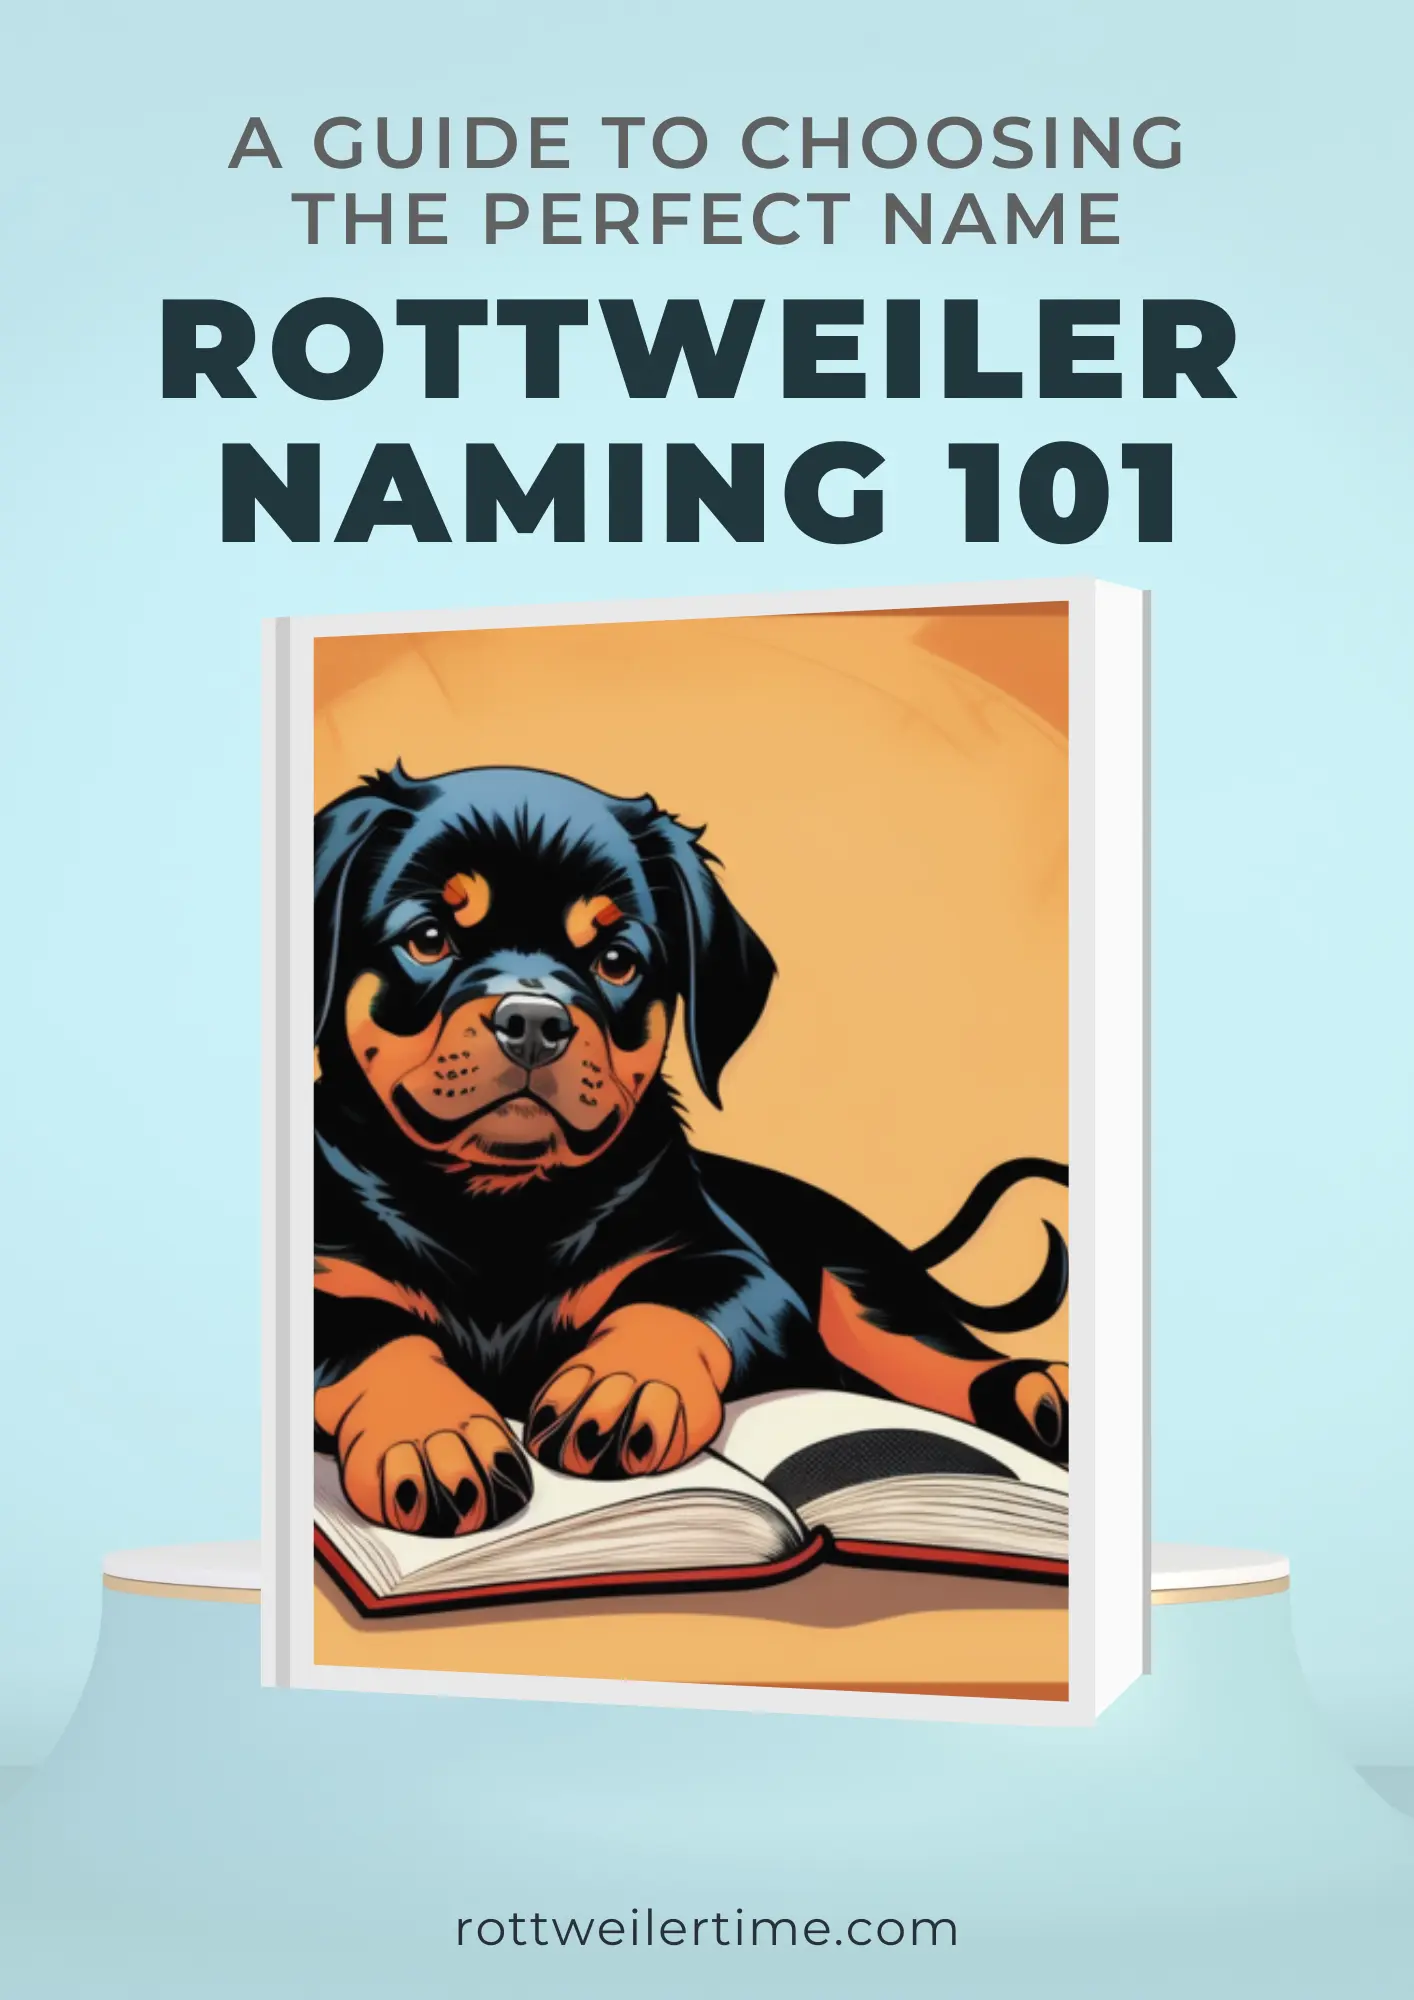 Rottweiler Naming 101